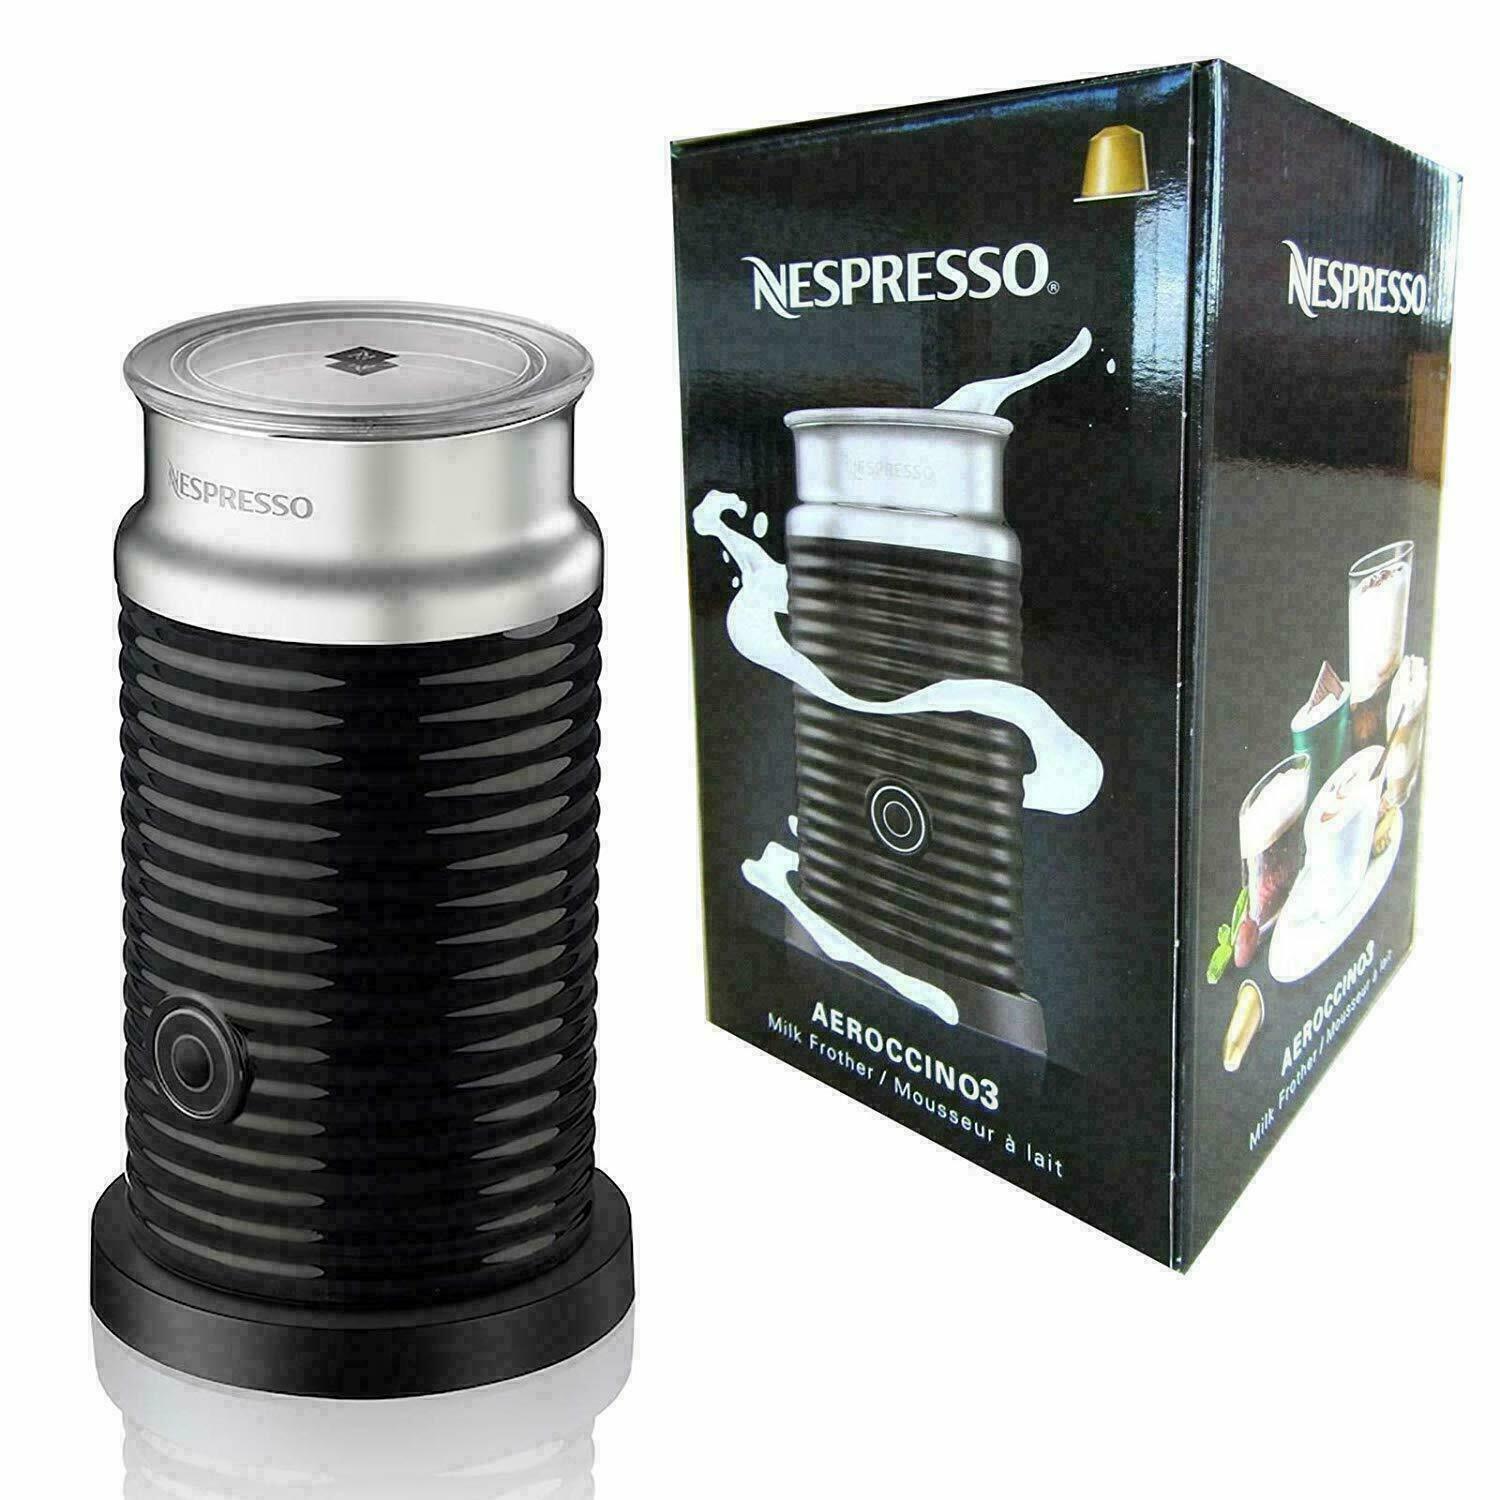 Nespresso Aeroccino3 Milk Frother - 3694-us-bk - Open Box